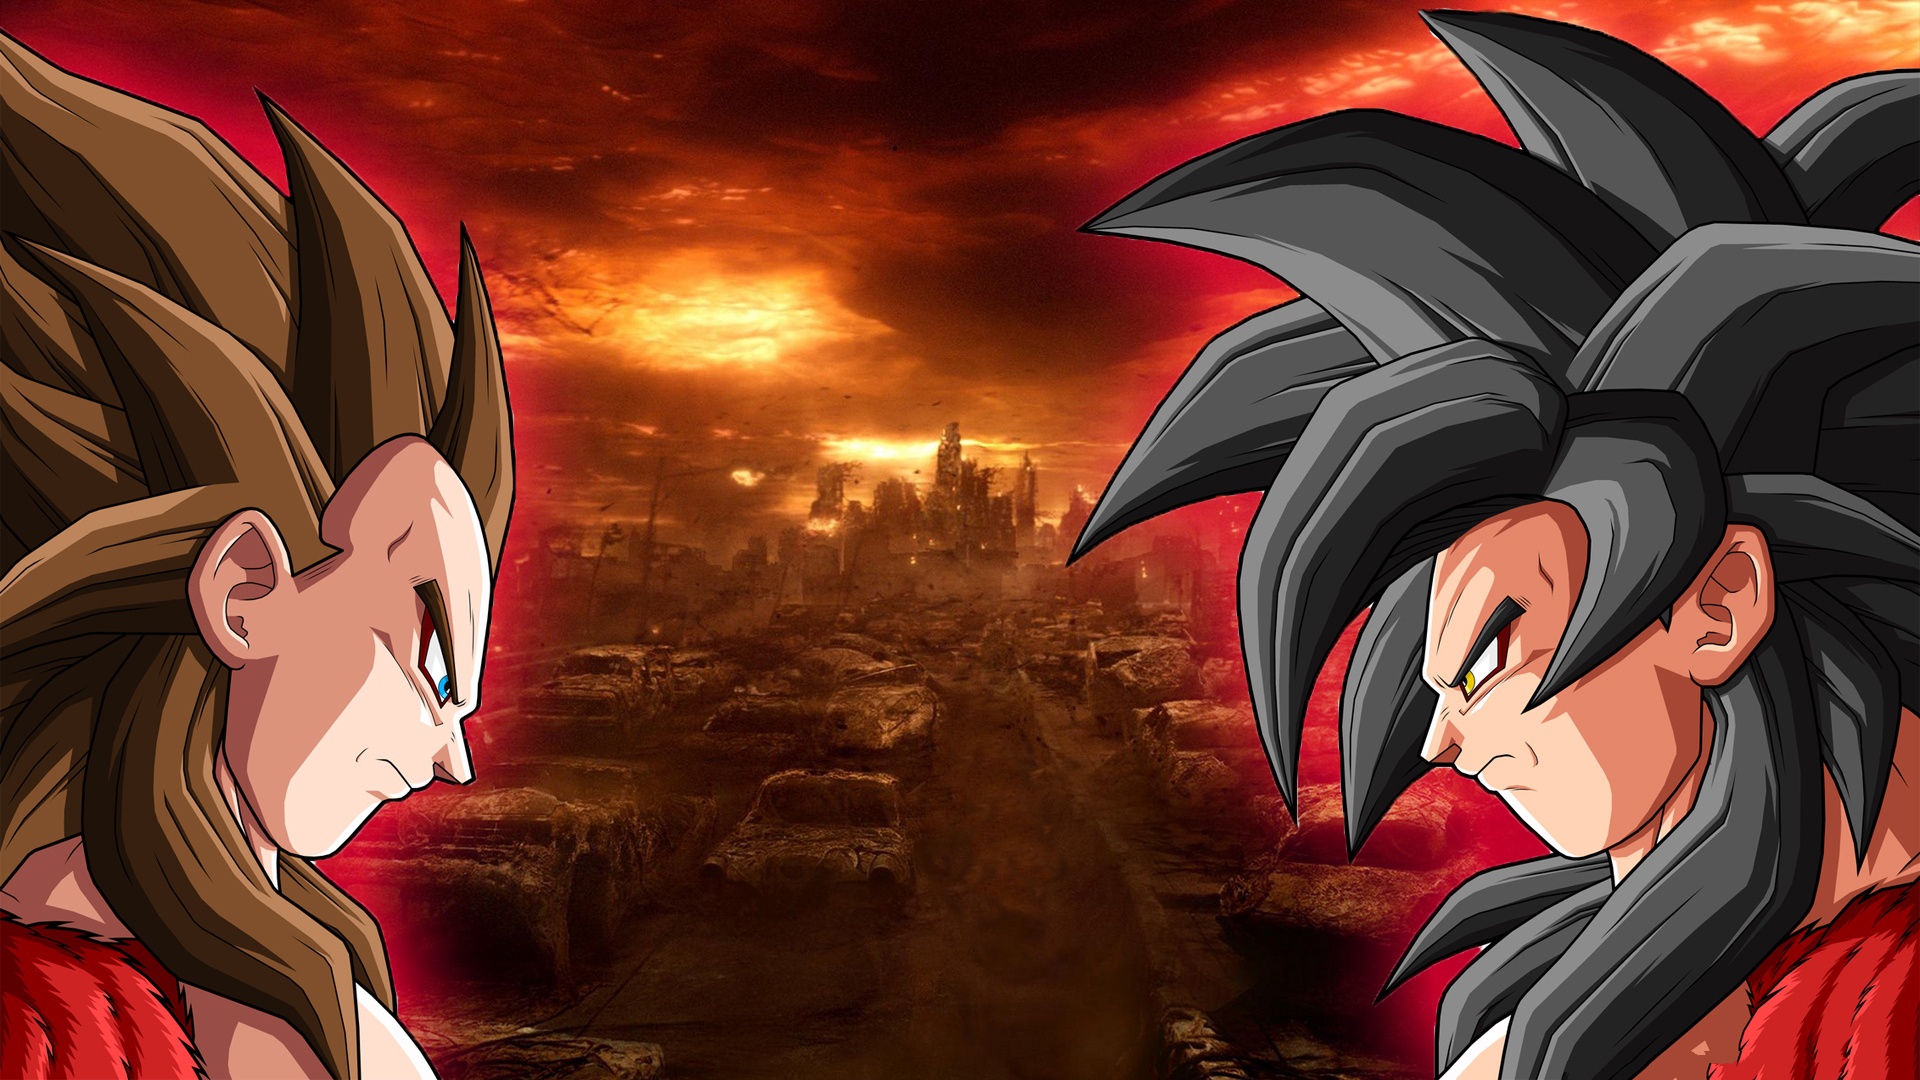 Free Download Goku Dragon Ball Z Backgrounds | PixelsTalk.Net